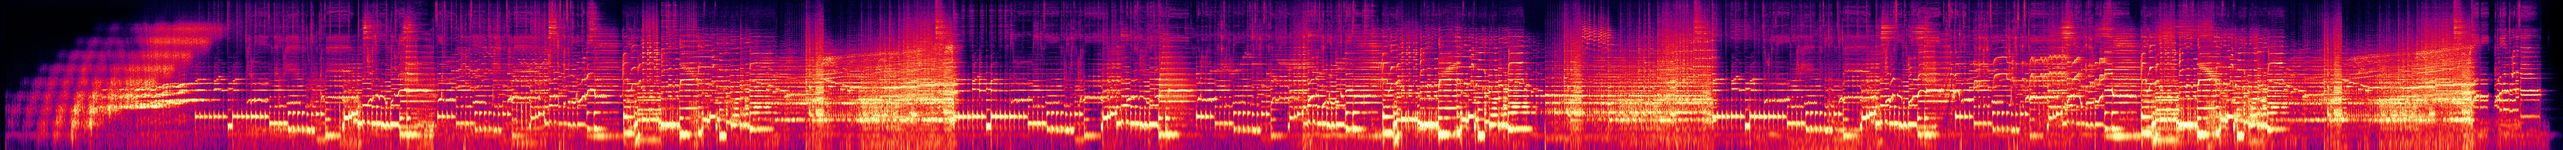 Your Hidden Dreams - Spectrogram.jpg